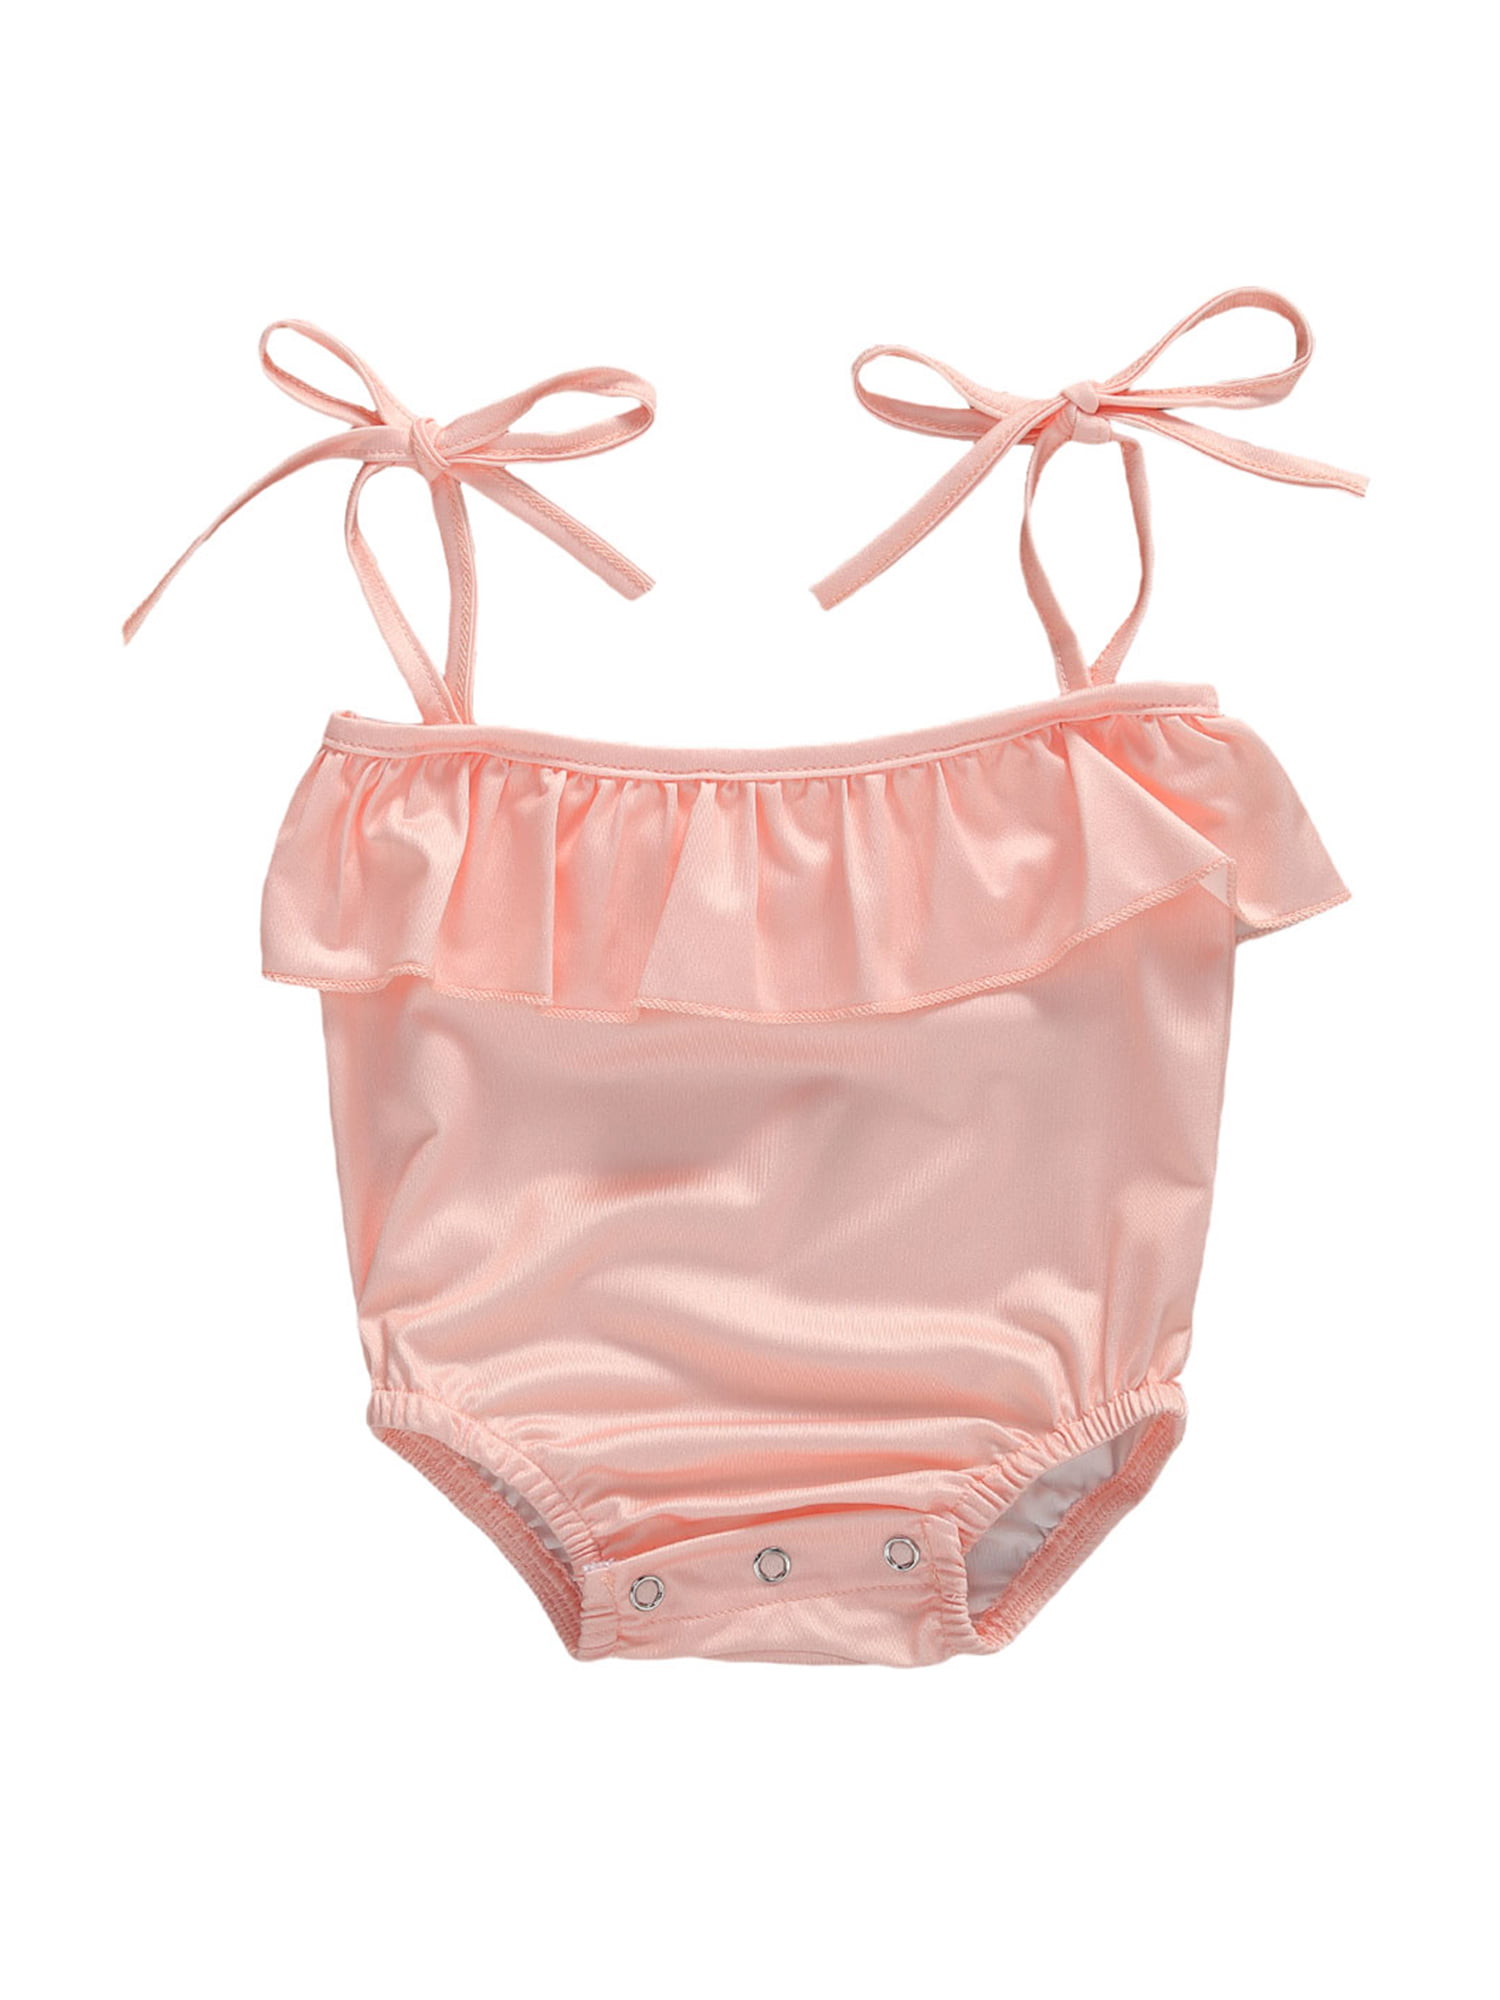 Bmnmsl Summer Baby Girls Swimsuit Toddlers Beach Sleeveless Suspender ...